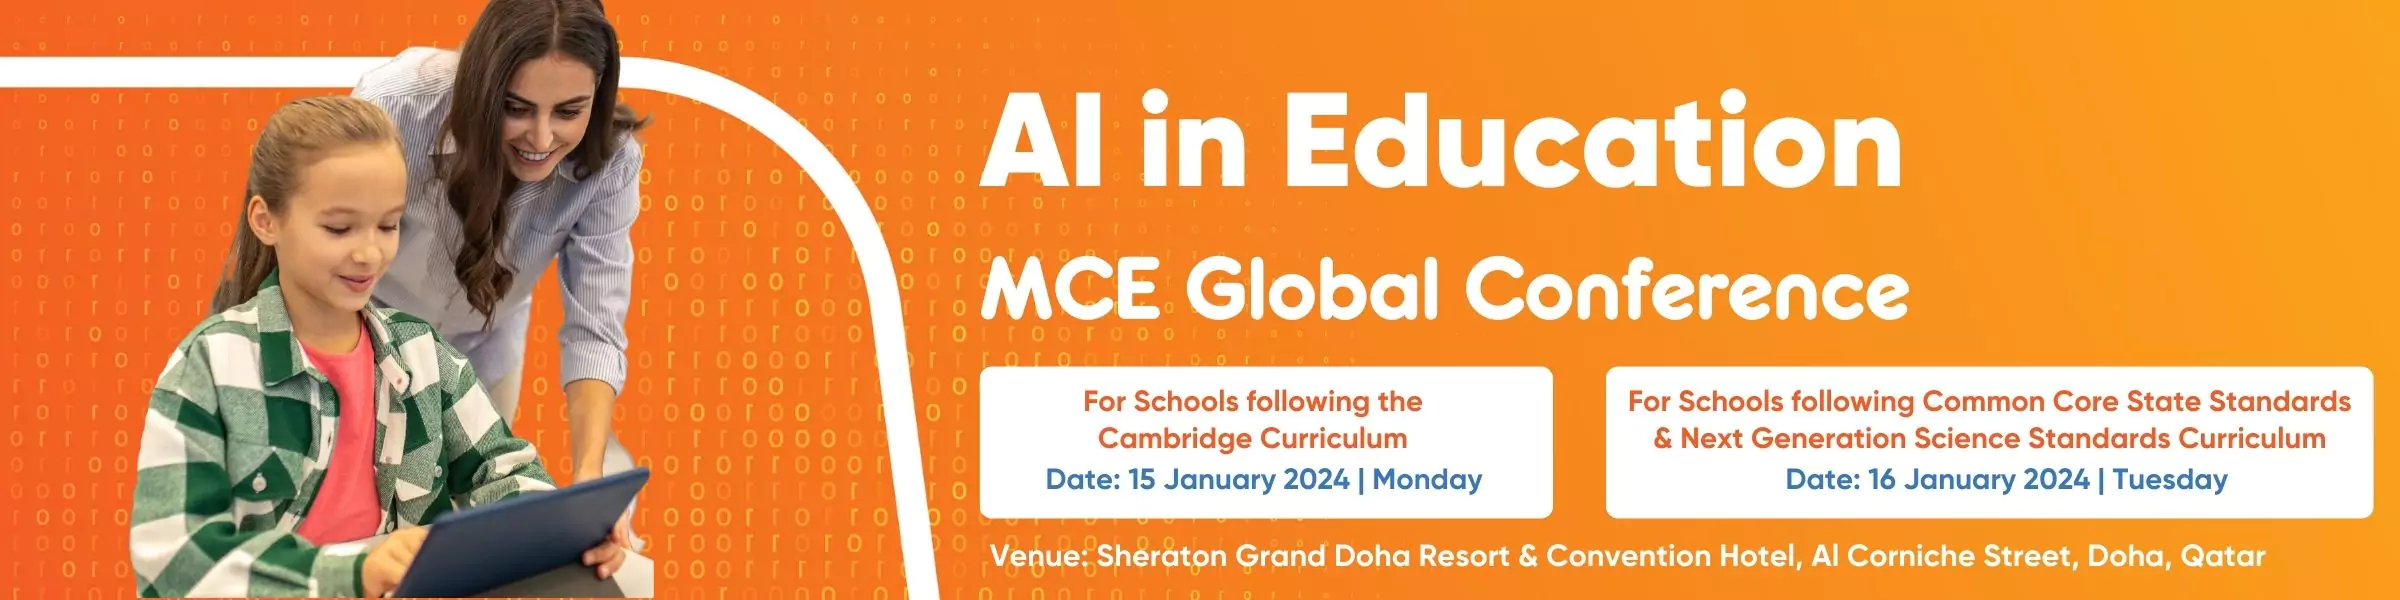 MCE Global Conference - Qatar